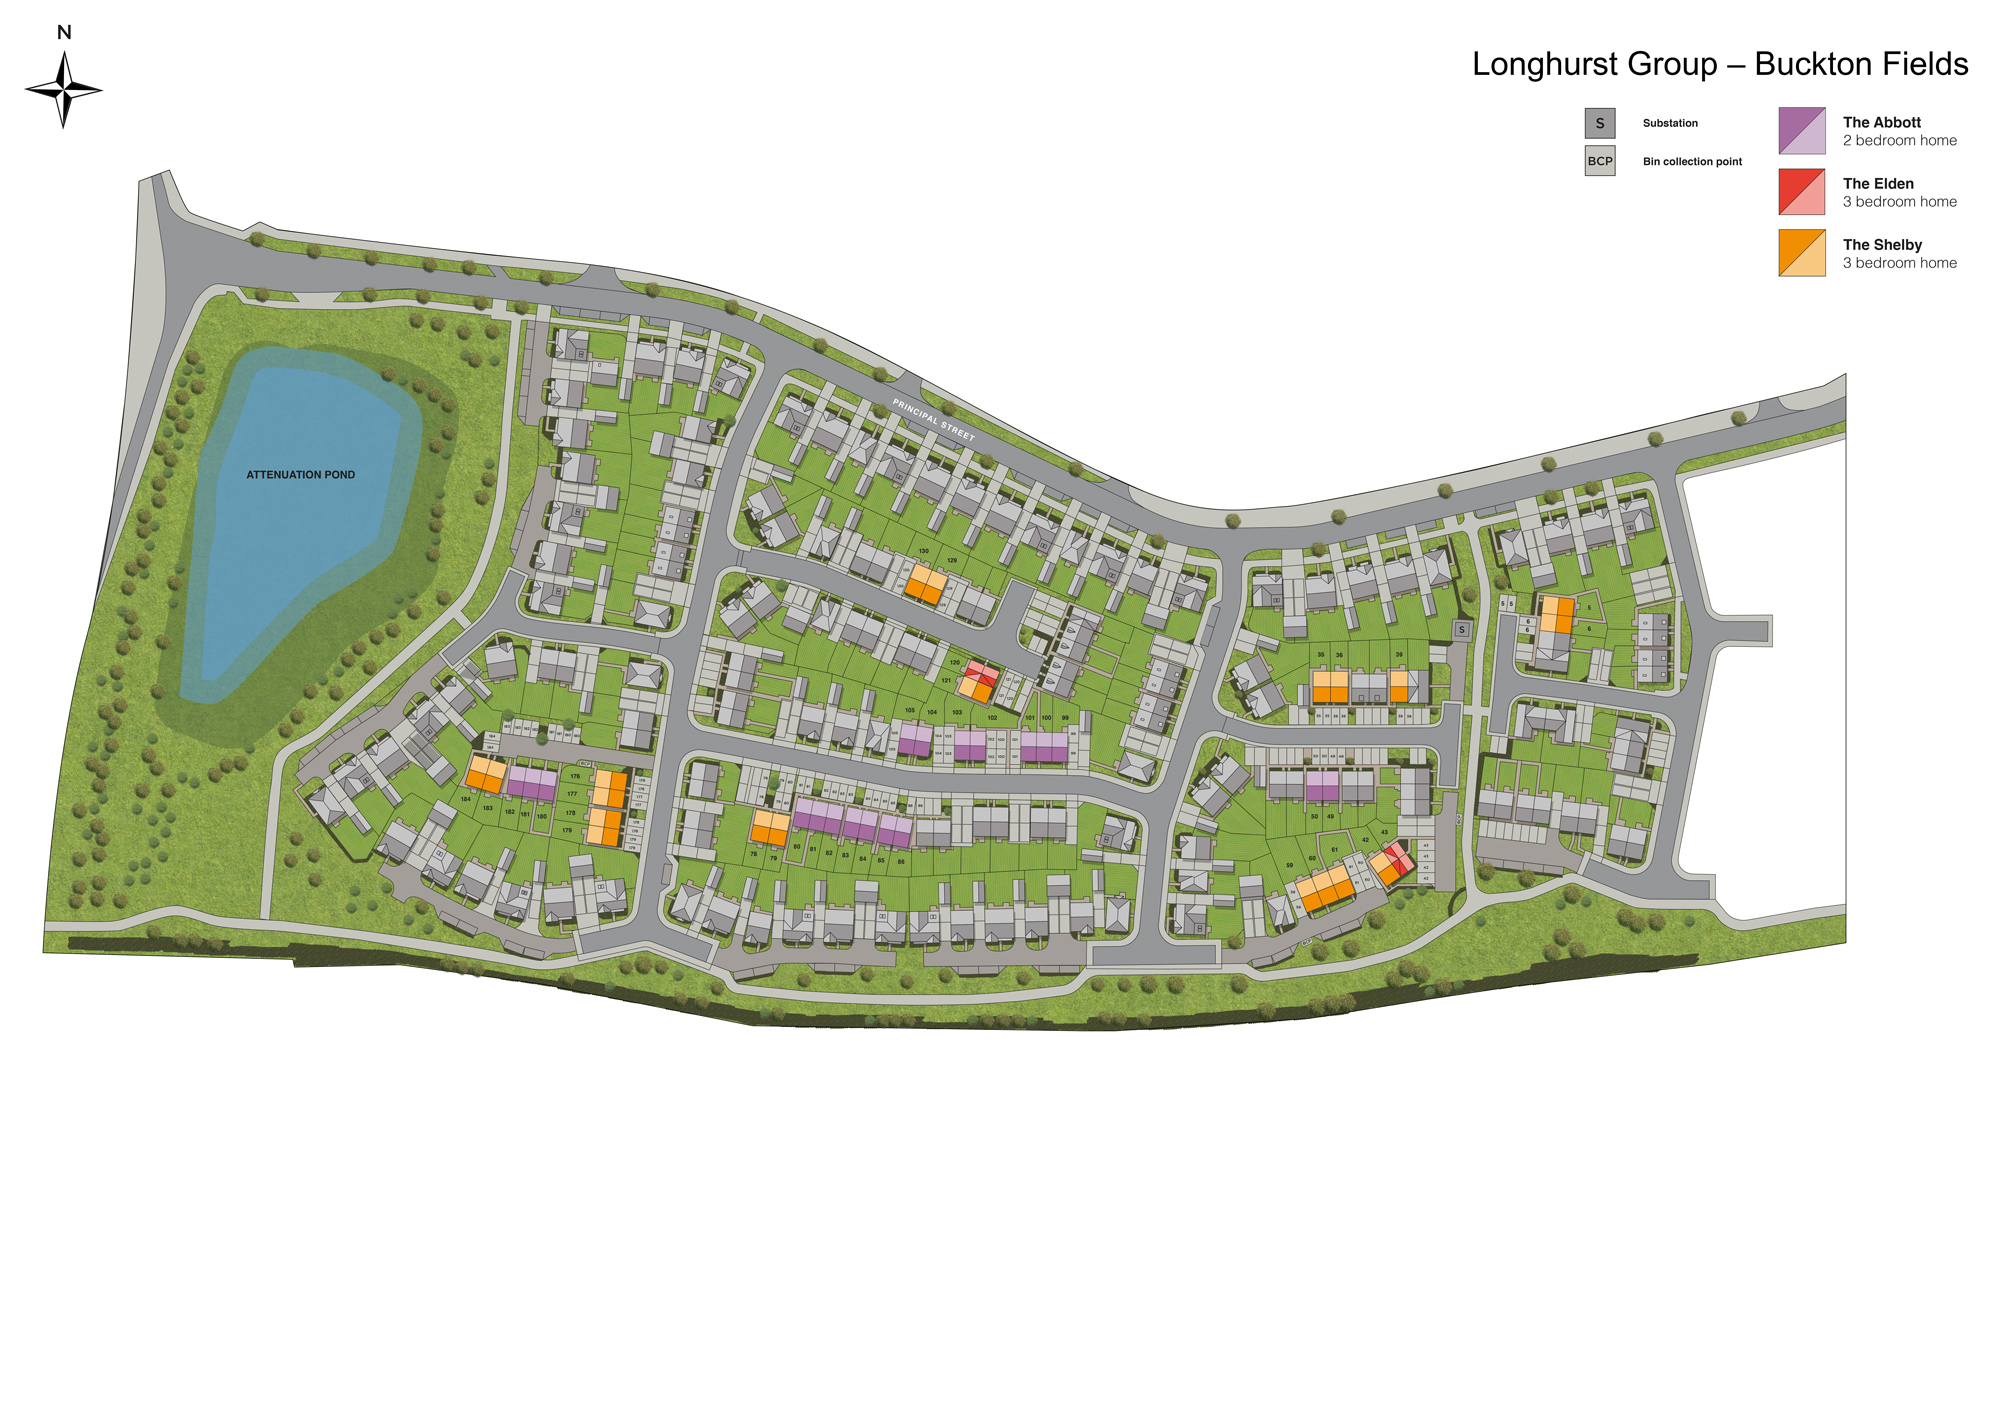 Longhurst Group Buckton Fields site plan